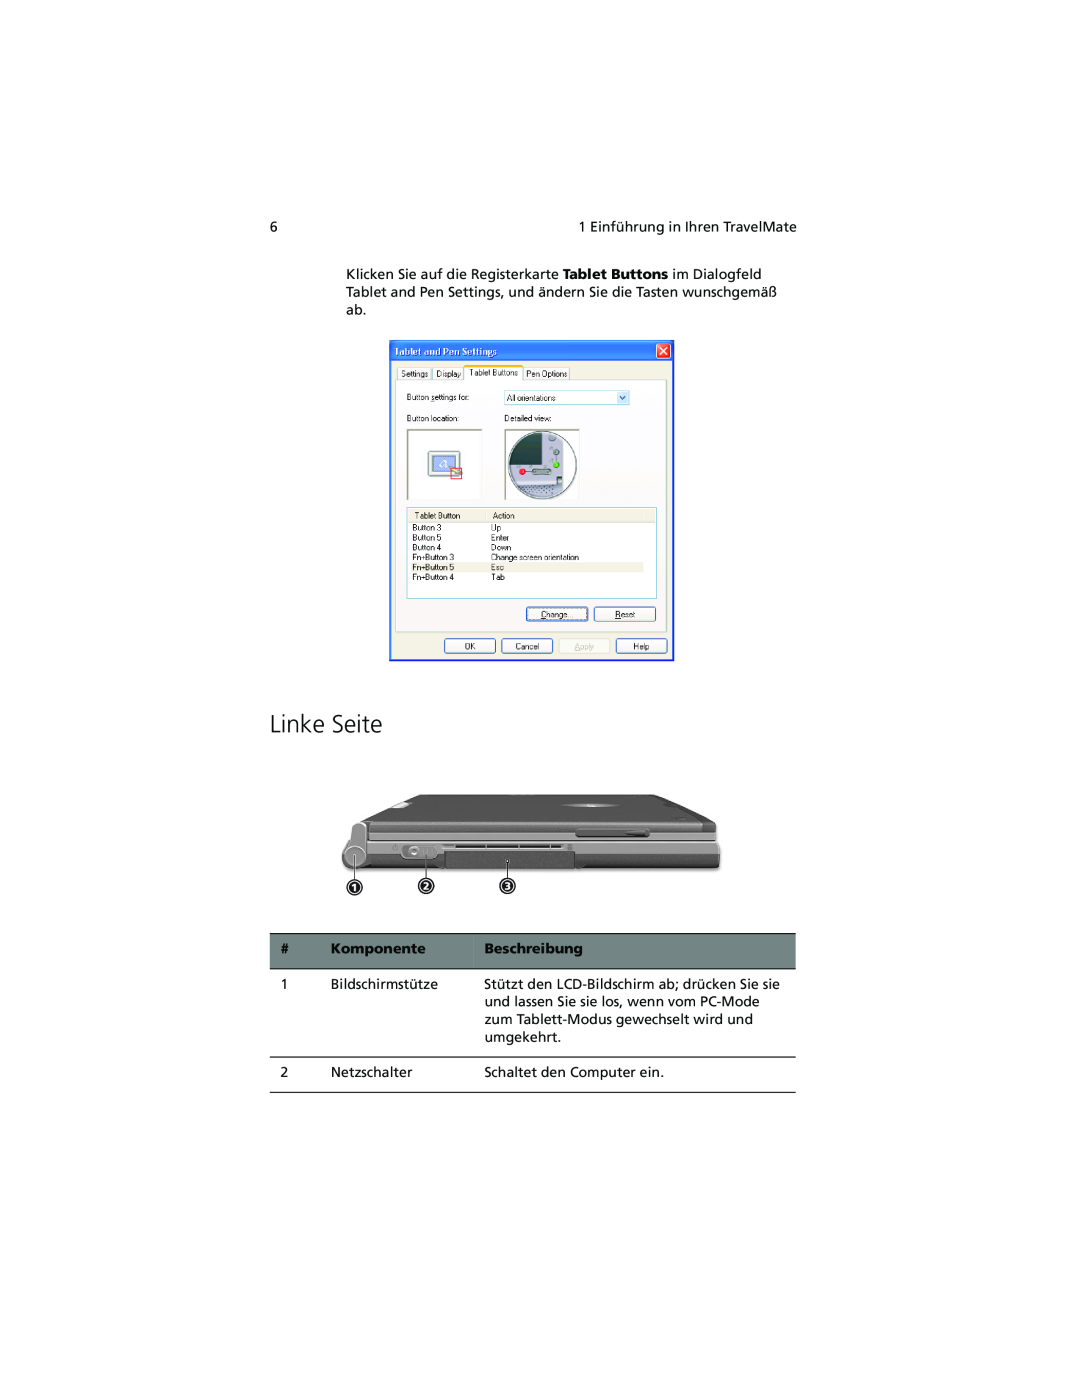 Acer C100-Series manual Linke Seite, Komponente, Beschreibung 